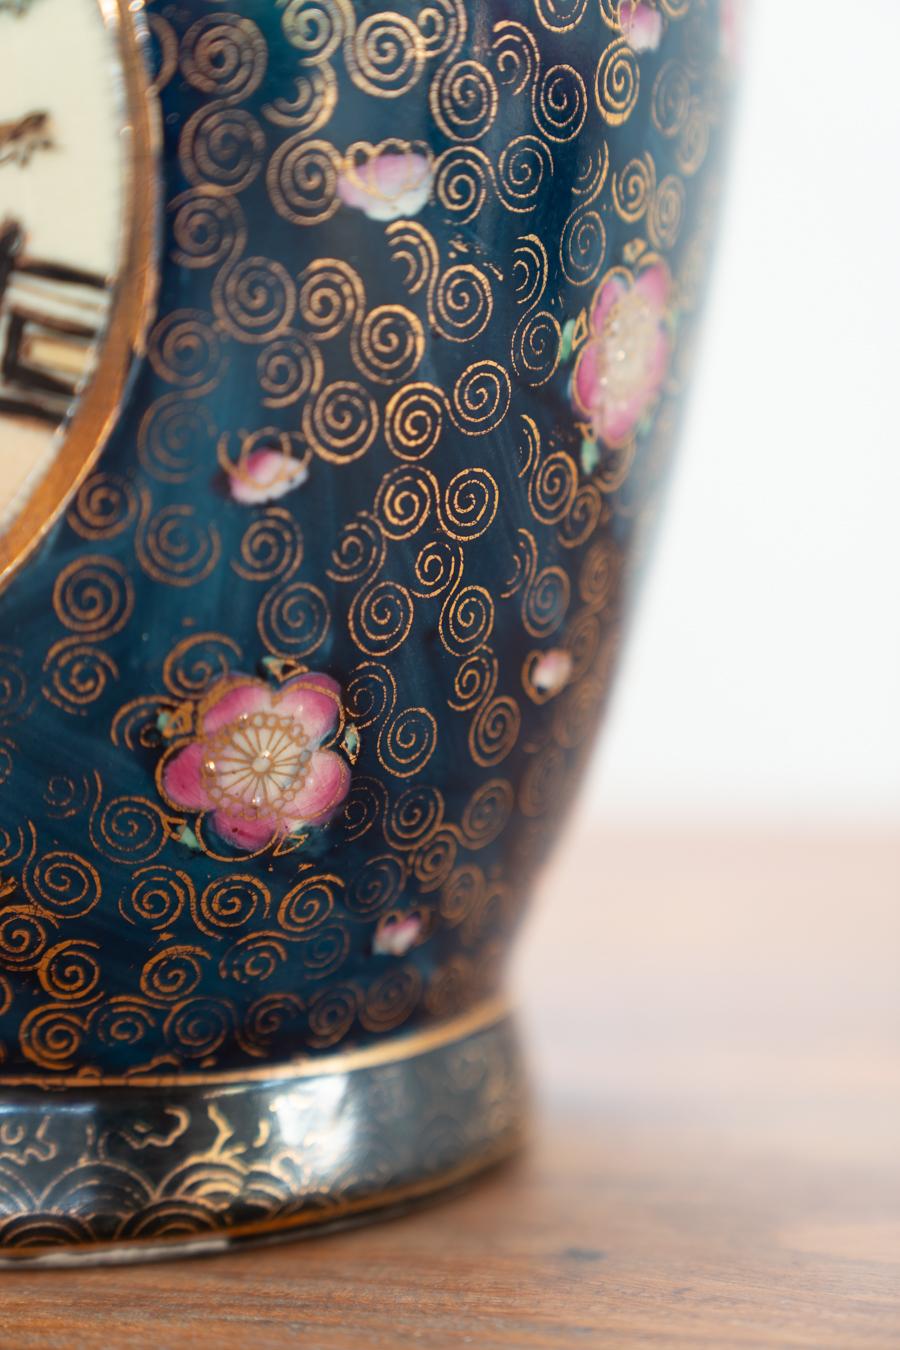 Japanese antique porcelain porcelain vases Meiji period 19th century For Sale 15